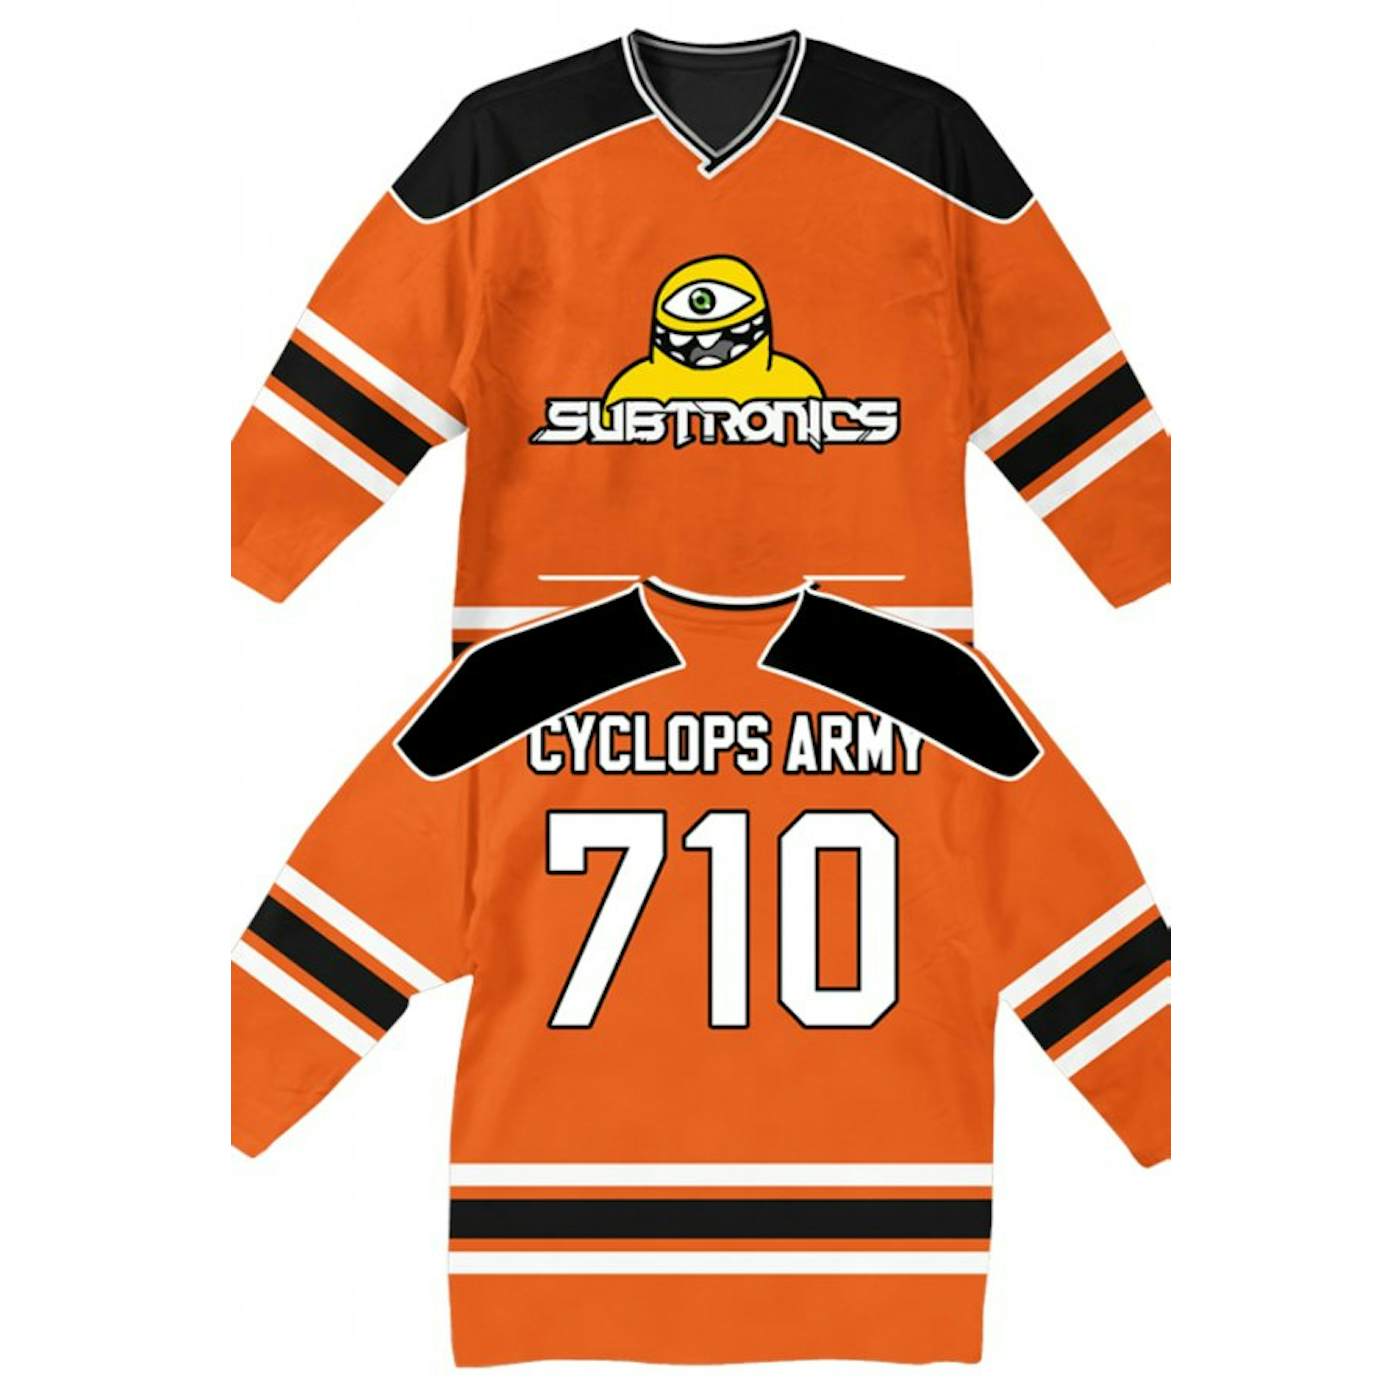 Subtronics Classic Cyclops Hockey Jersey